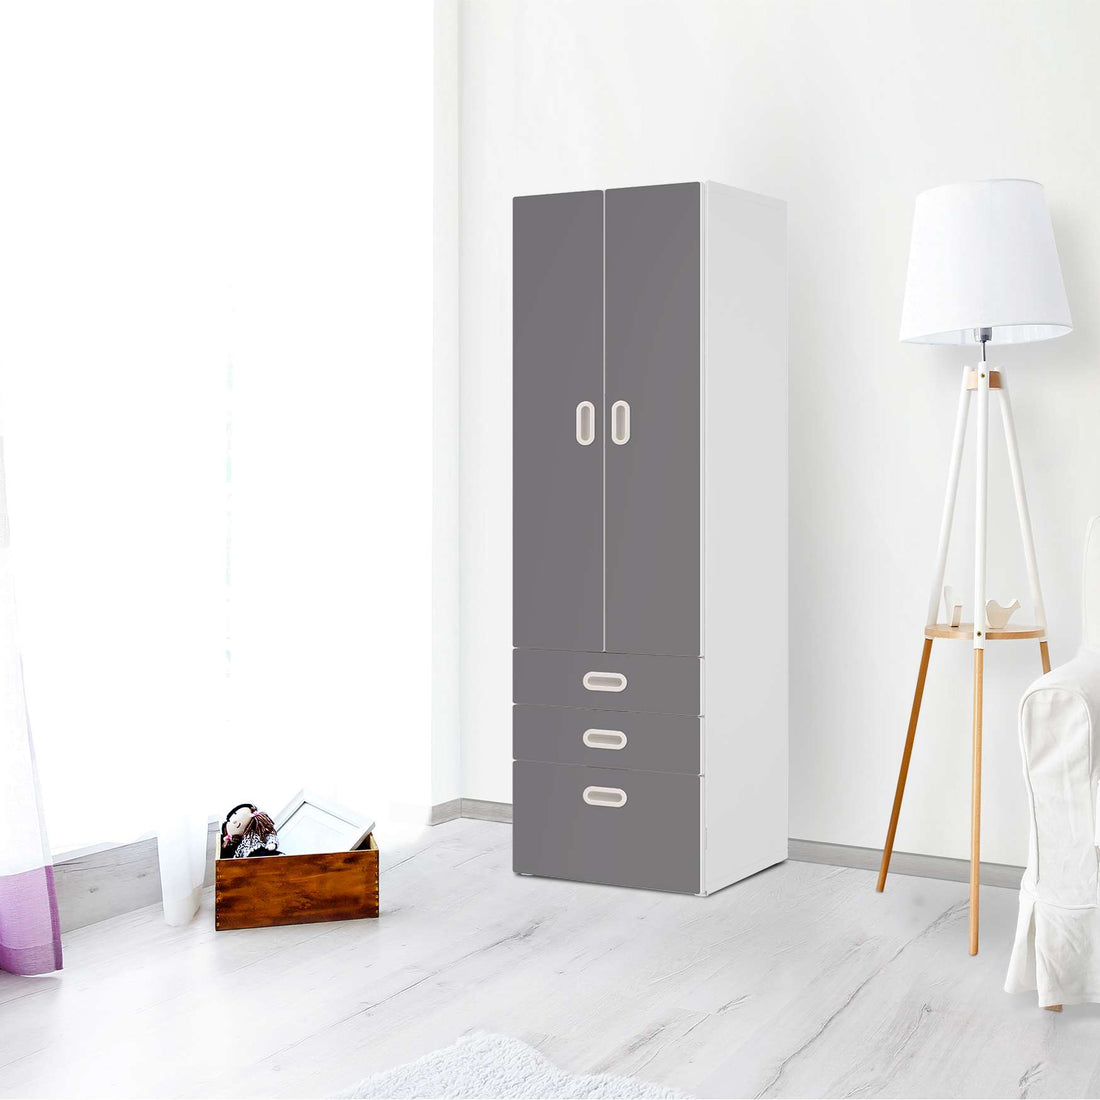 Klebefolie Grau Light - IKEA Stuva / Fritids kombiniert - 3 Schubladen und 2 große Türen - Kinderzimmer